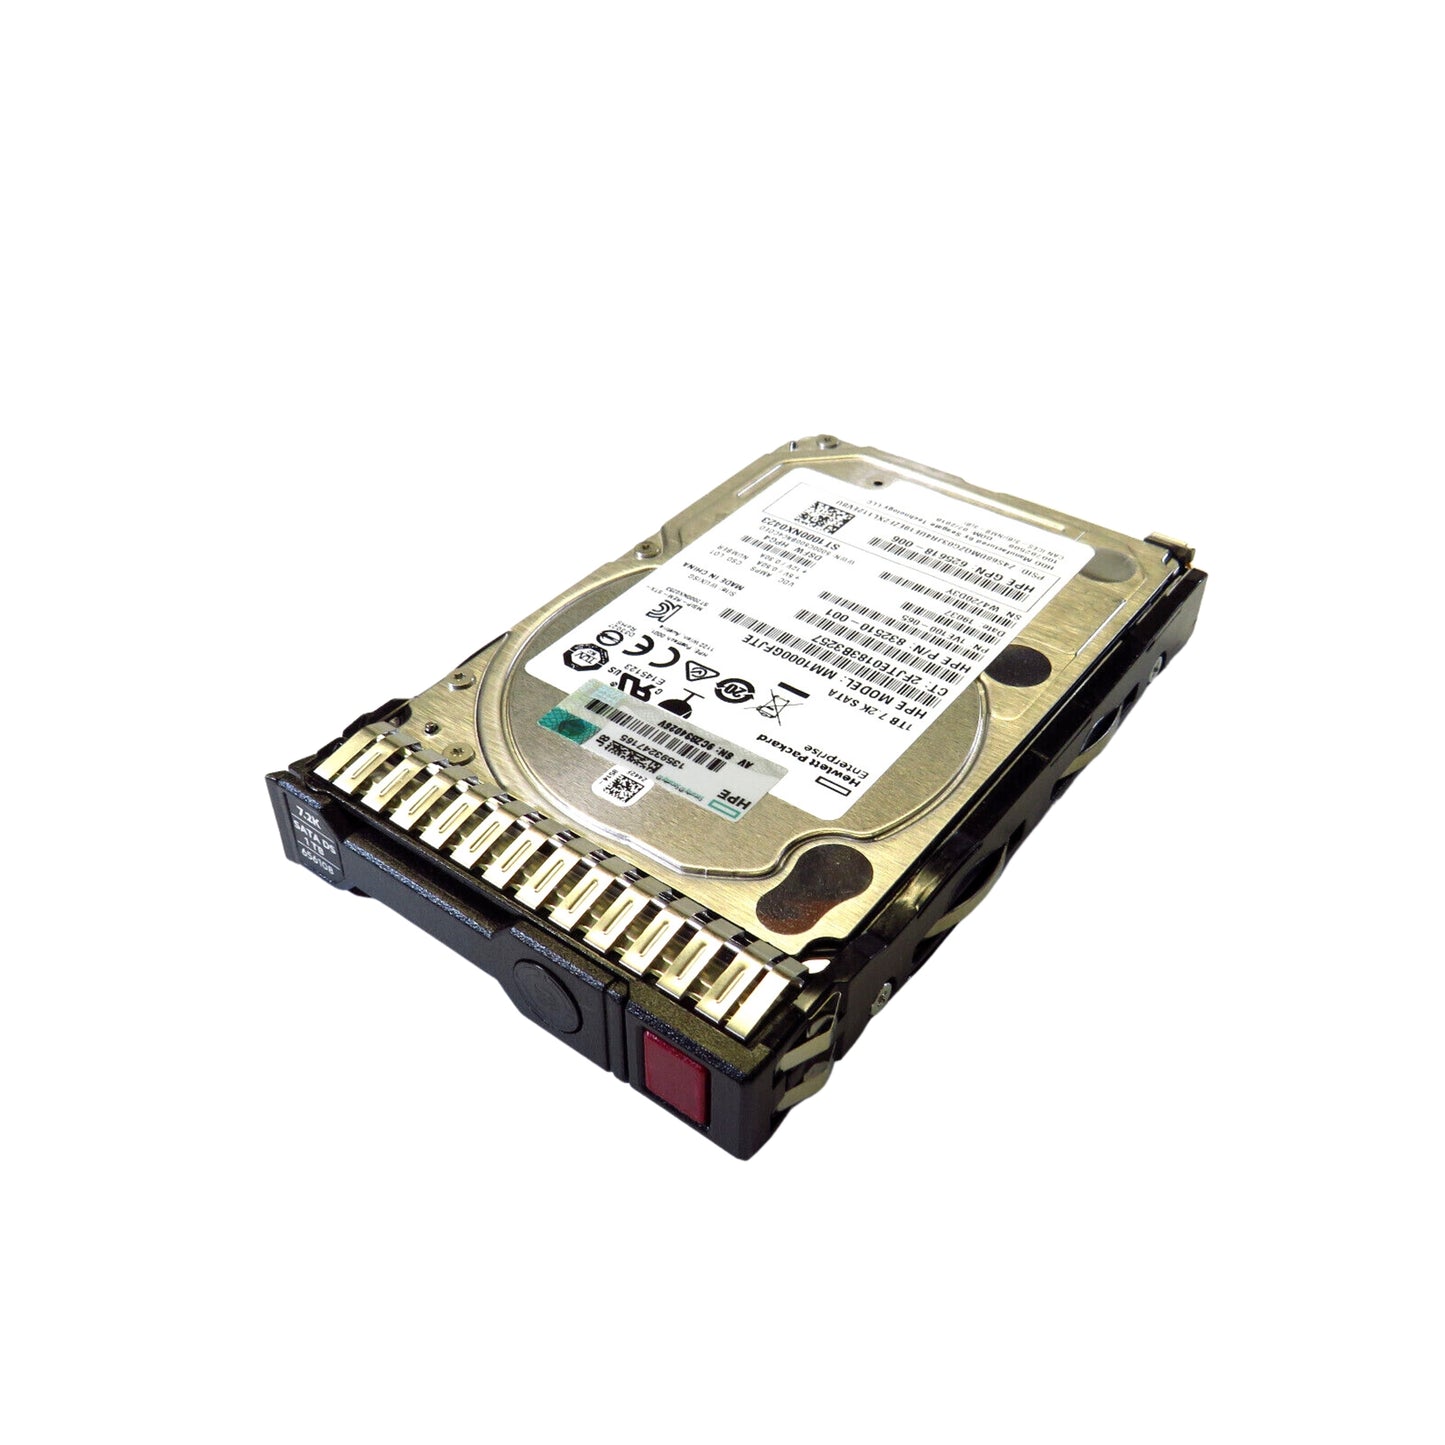 HP 656108-001 2.5" 1TB 7200RPM SATA III Hard Disk Drive (HDD), Silver (Refurbished)